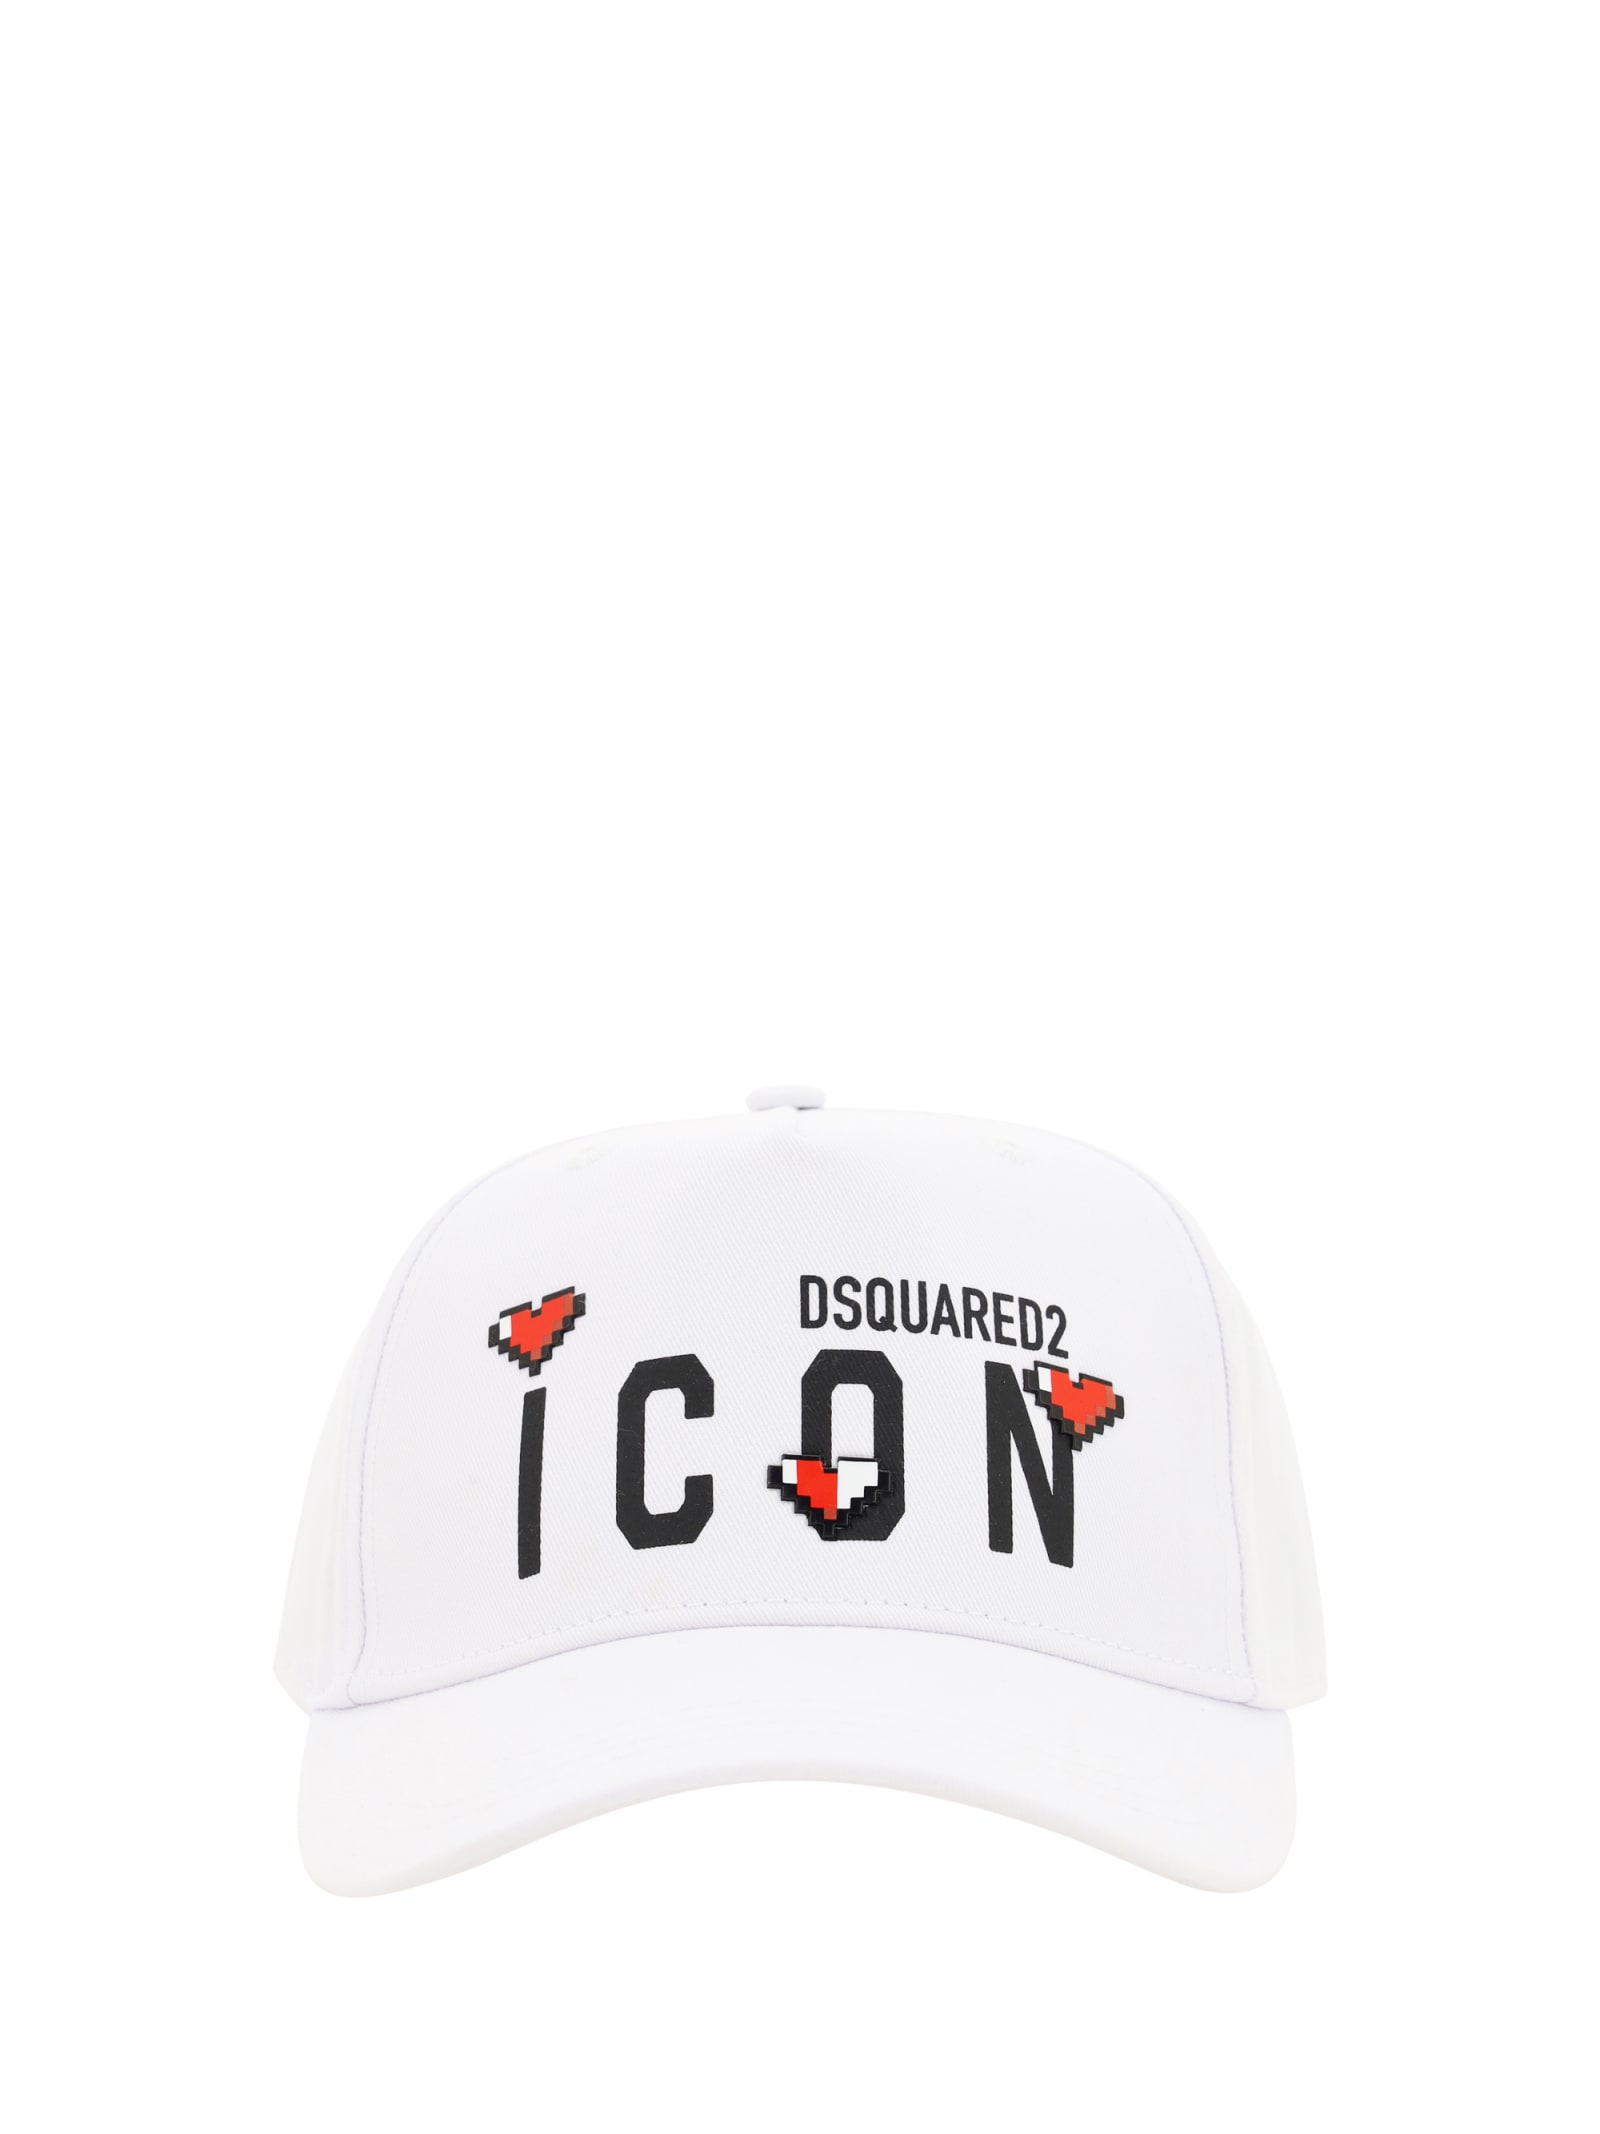 Dsquared2 White Cotton Hat